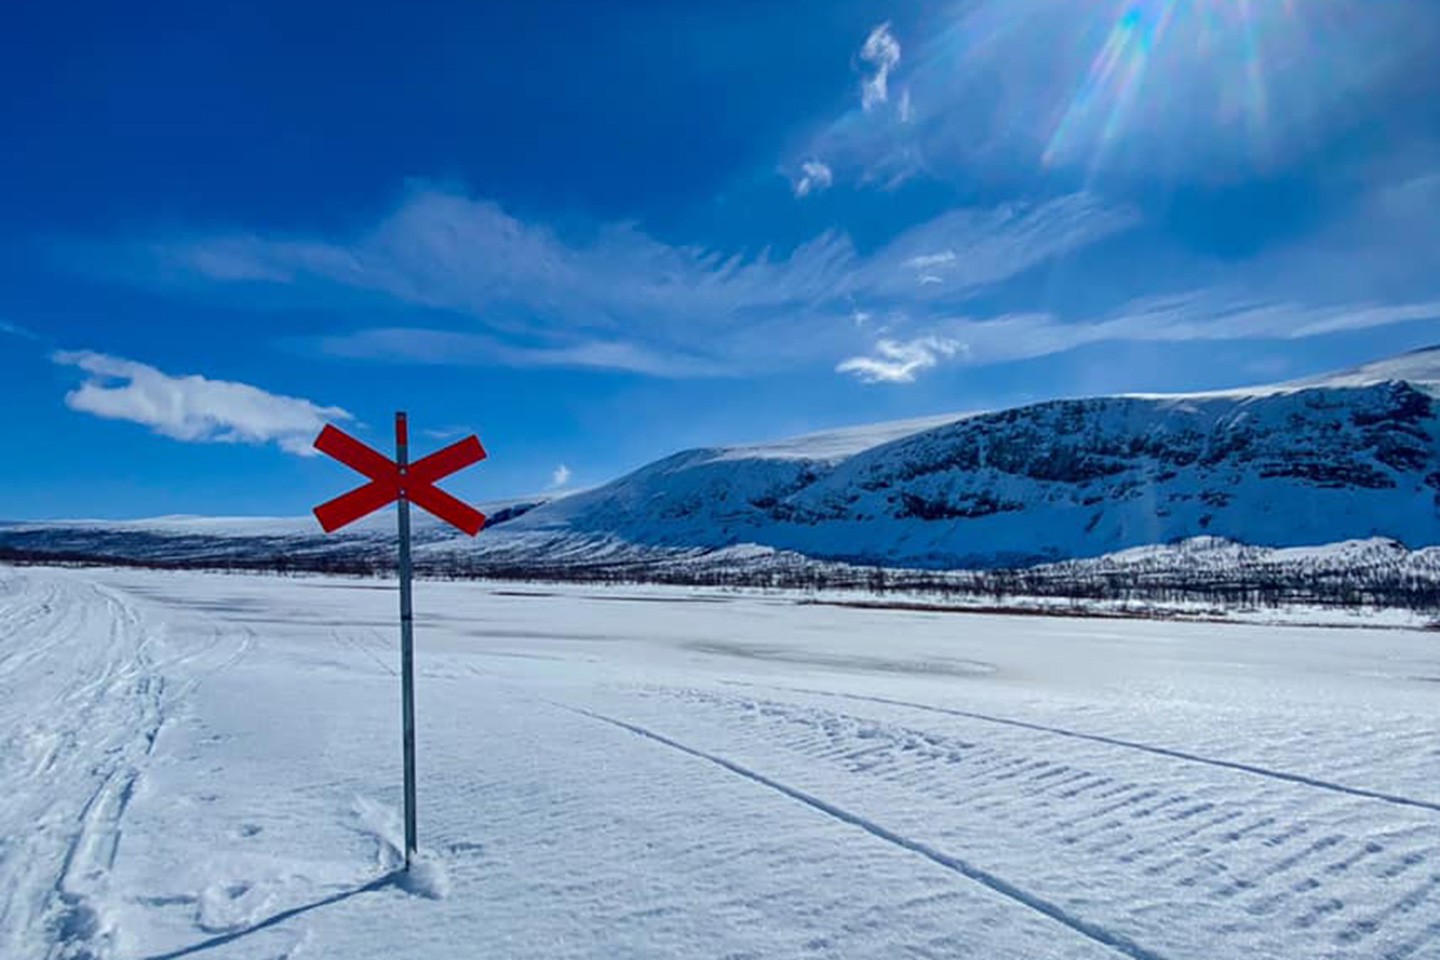 Sneeuwscootertocht Kiruna